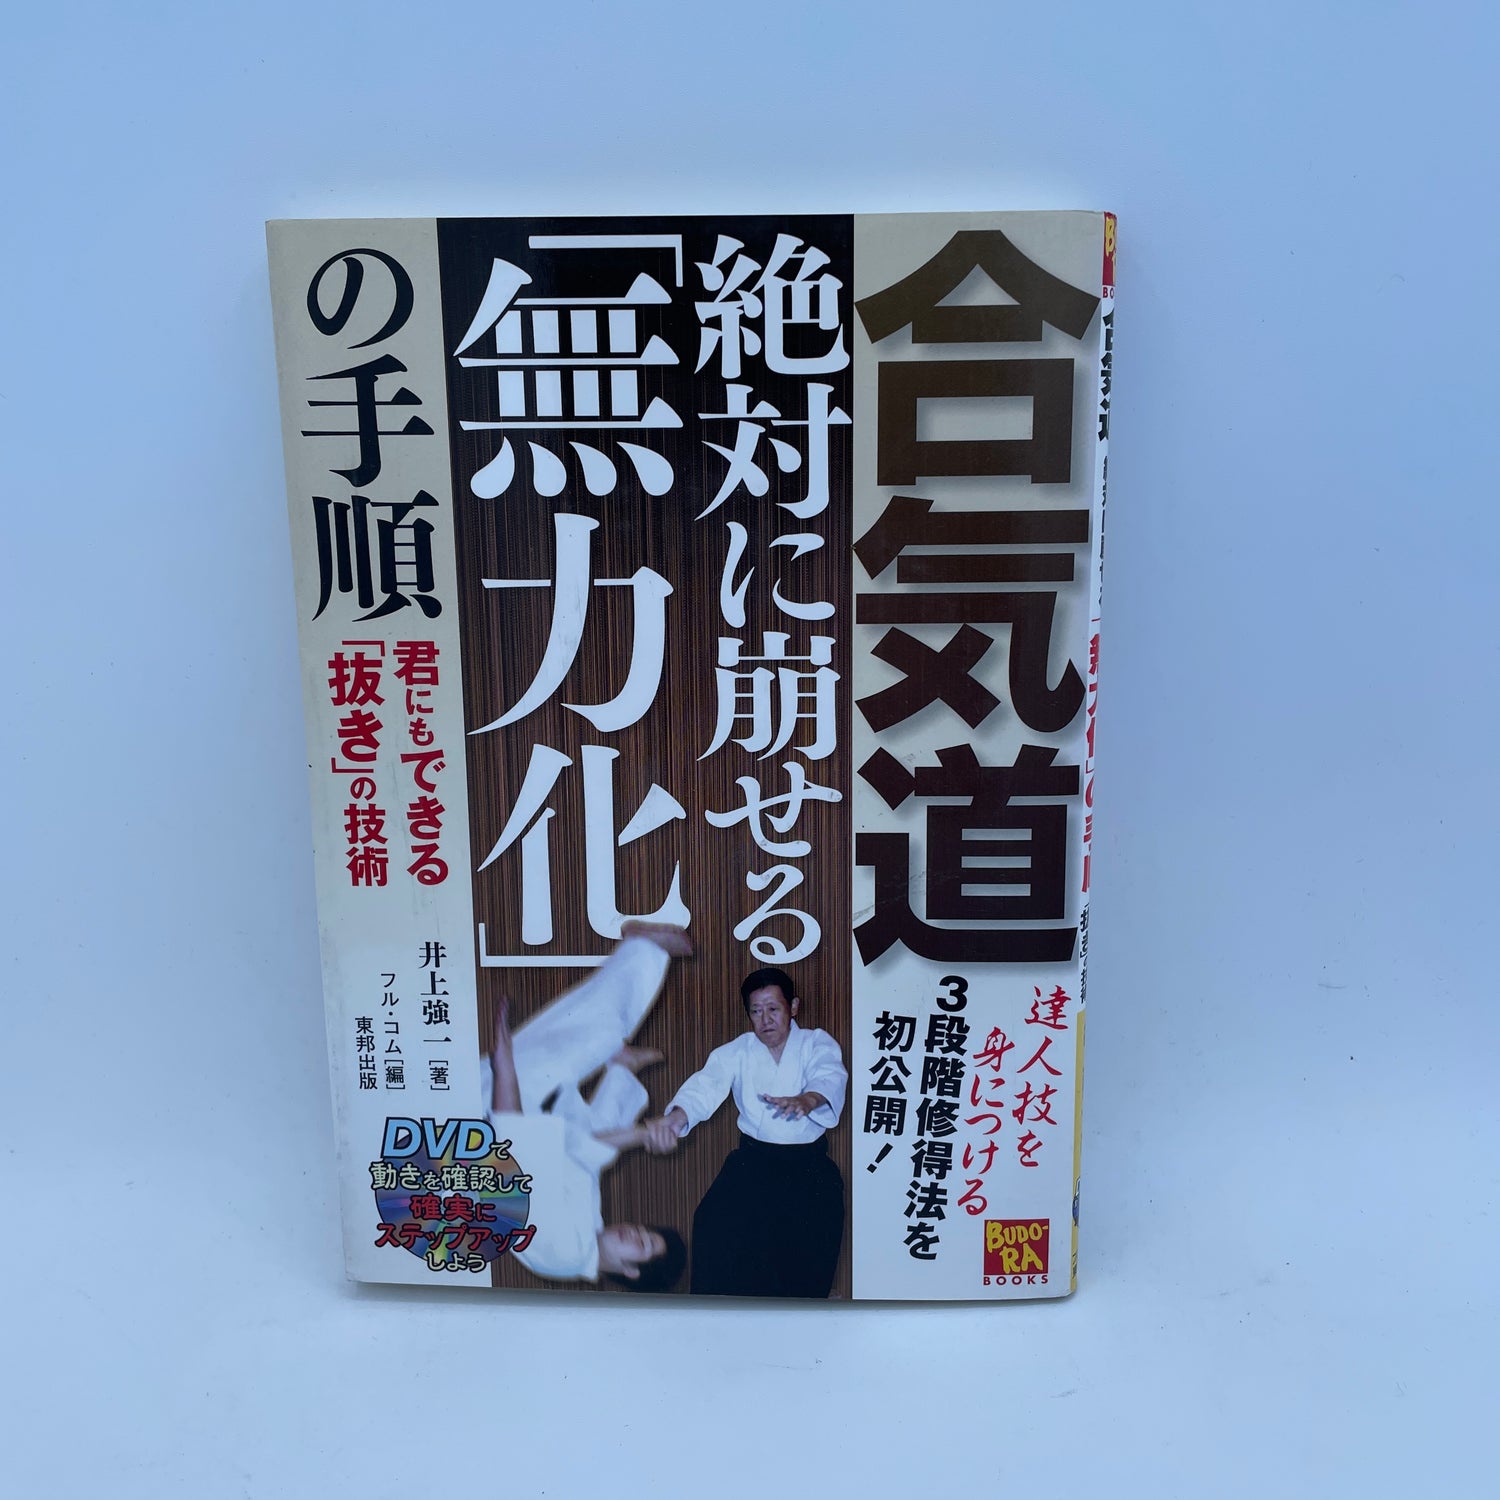 Aikido Muryoka Book & DVD by Kyoichi Inoue